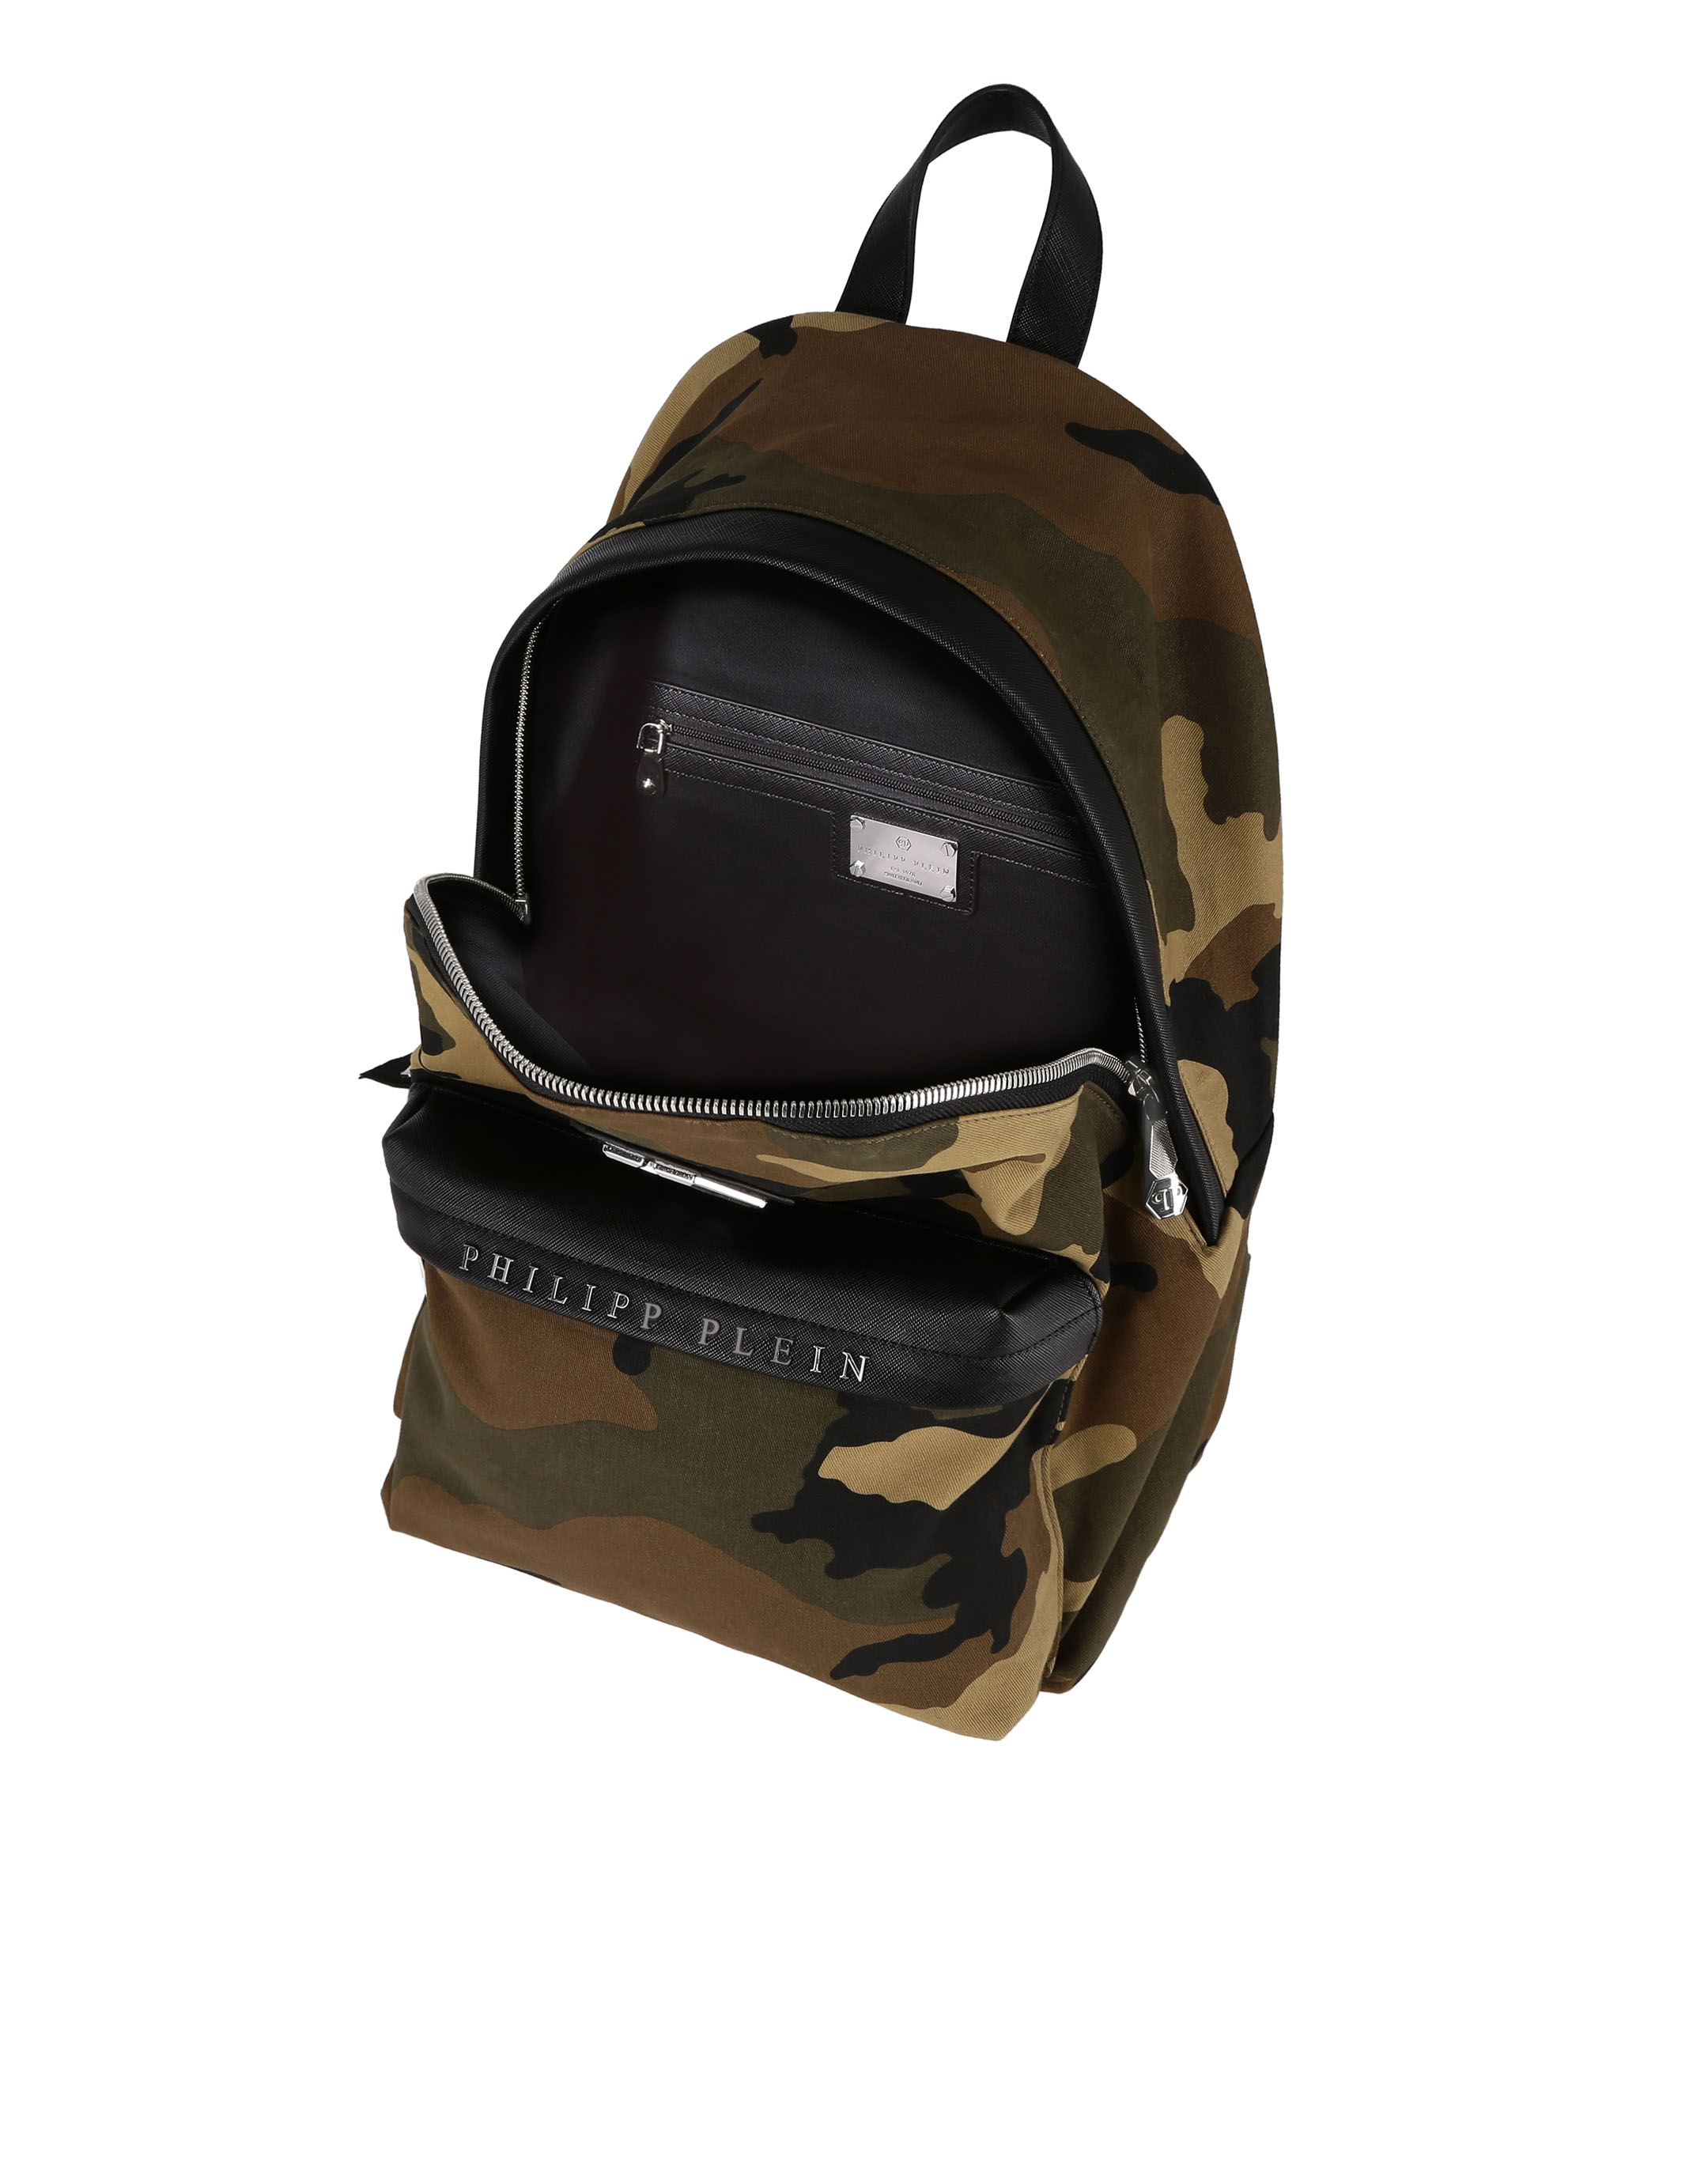 Baggallini Black/gray Camouflage Convertible Strap Backpack Purse Camo  Satchel | eBay